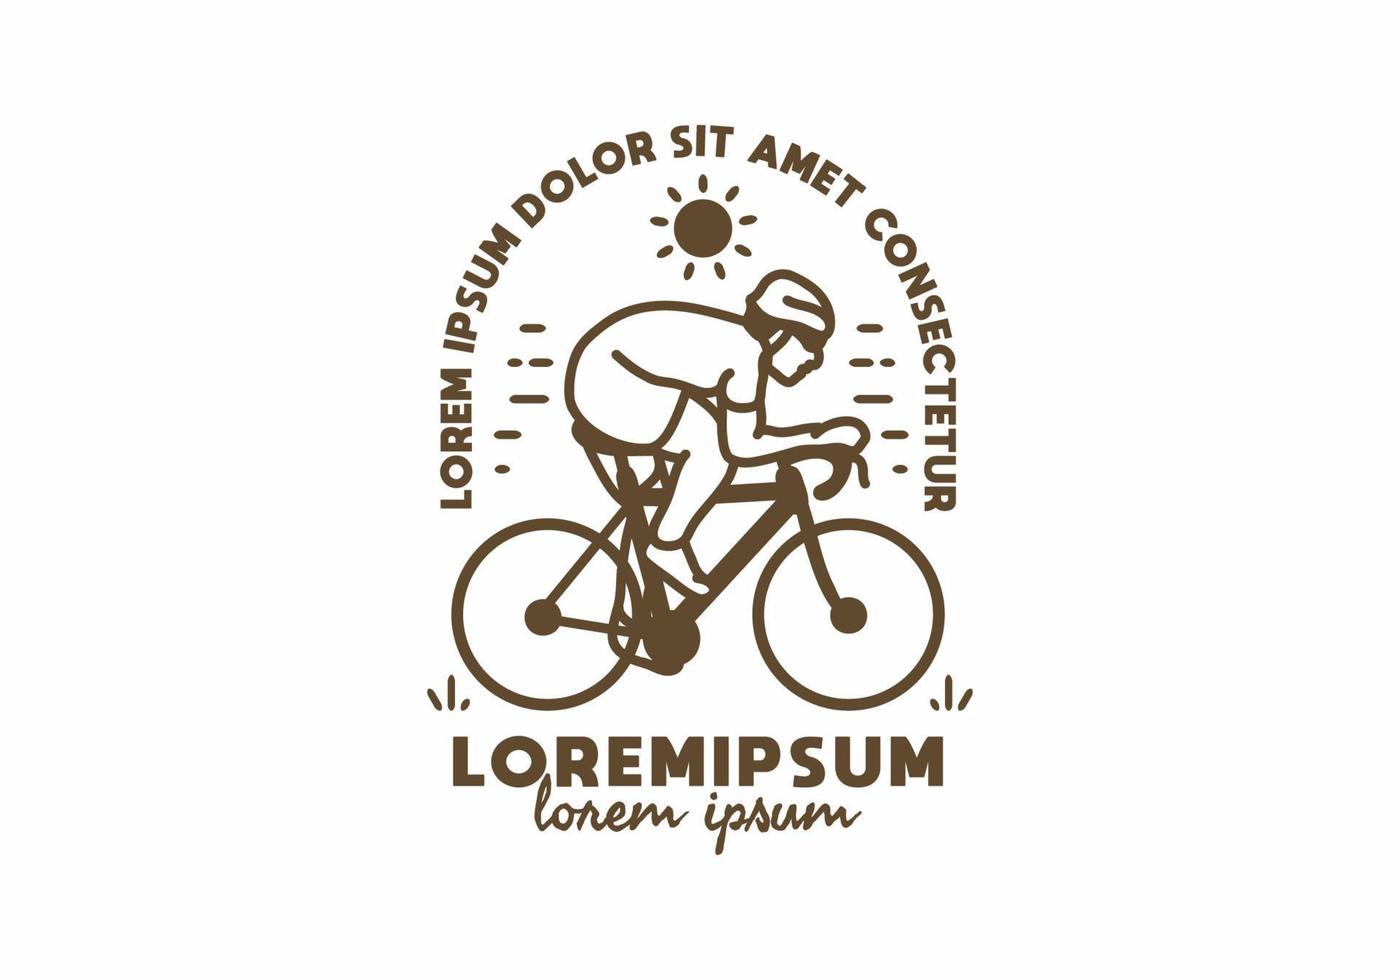 arte de línea de bicicleta rápida con texto de lorem ipsum vector